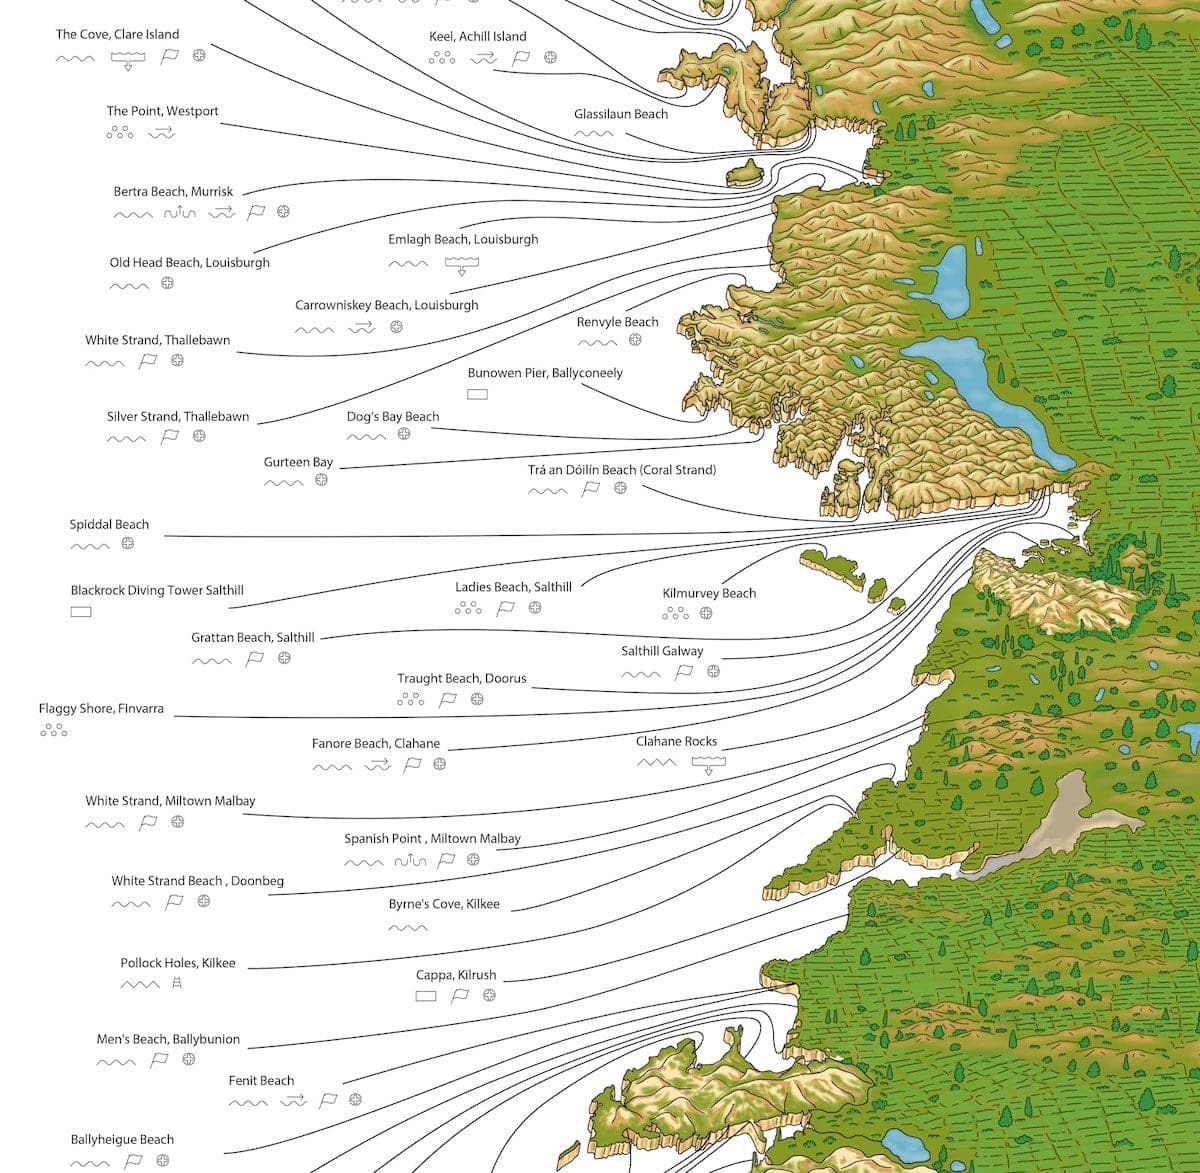 The Irish Sea Swim Map (1st Edition)